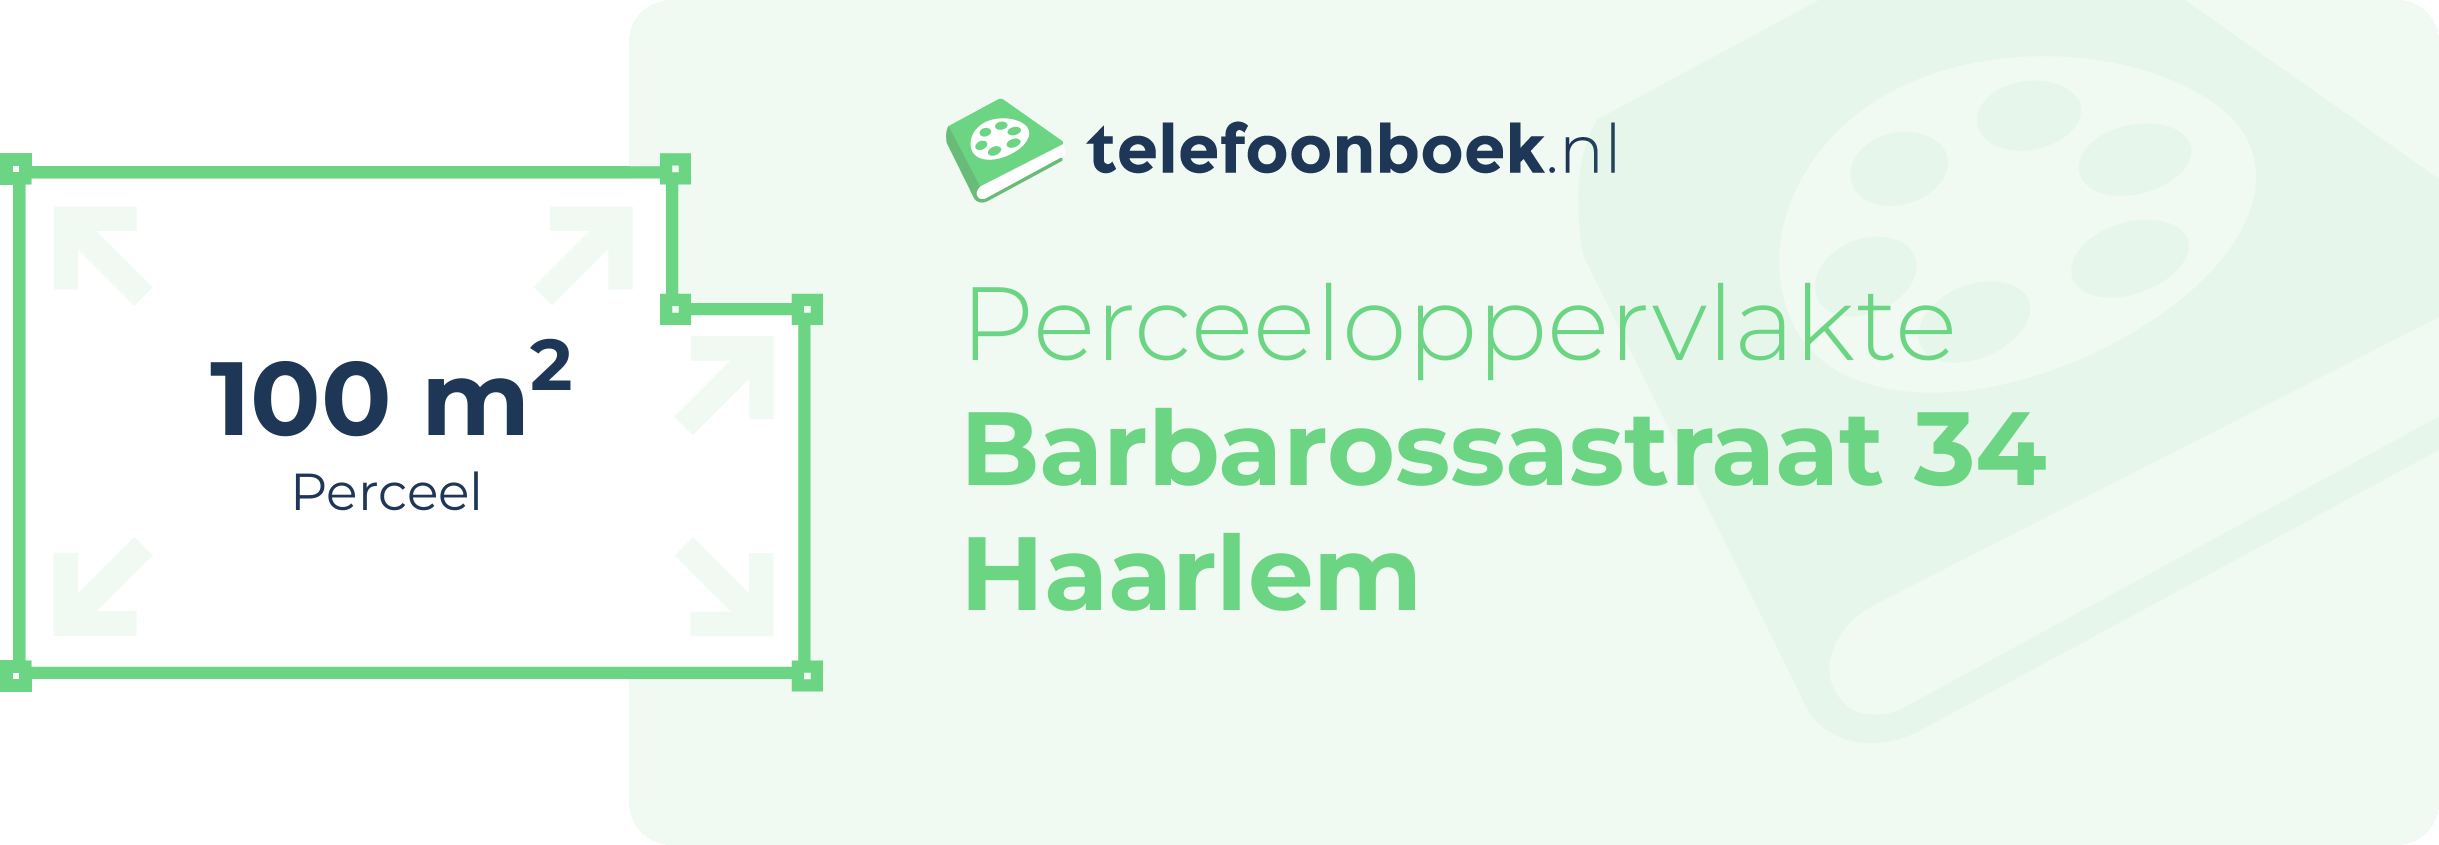 Perceeloppervlakte Barbarossastraat 34 Haarlem